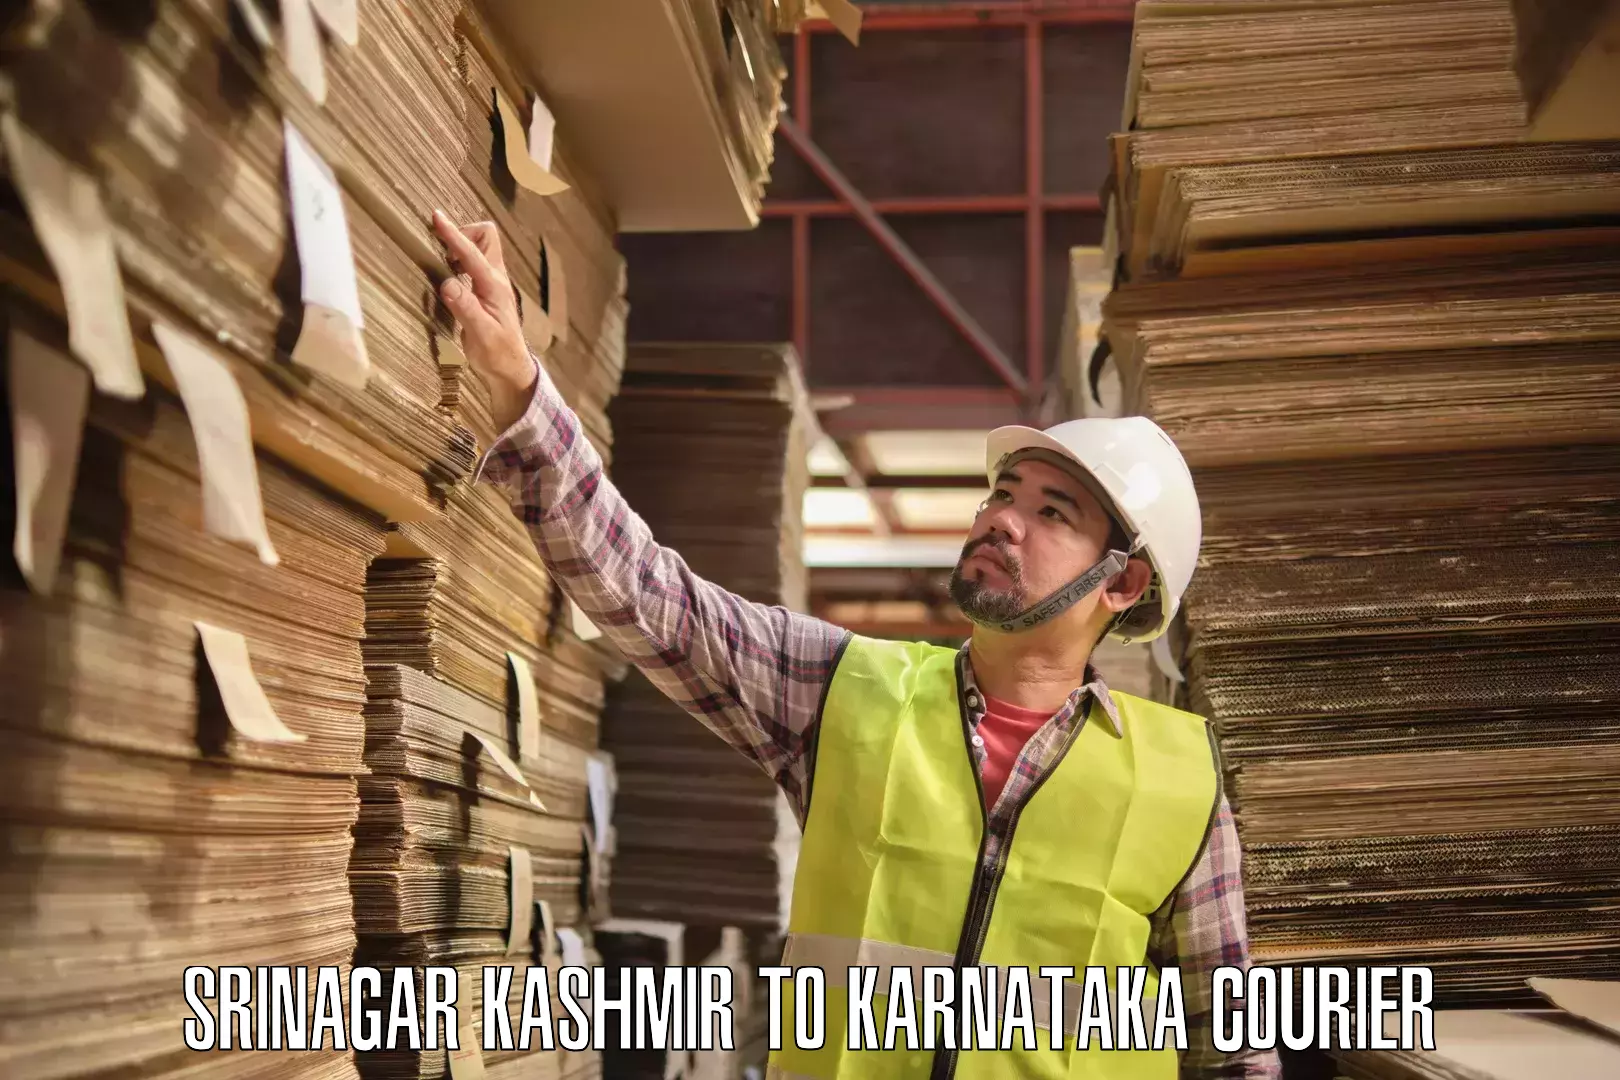 High-speed logistics services Srinagar Kashmir to Karkala